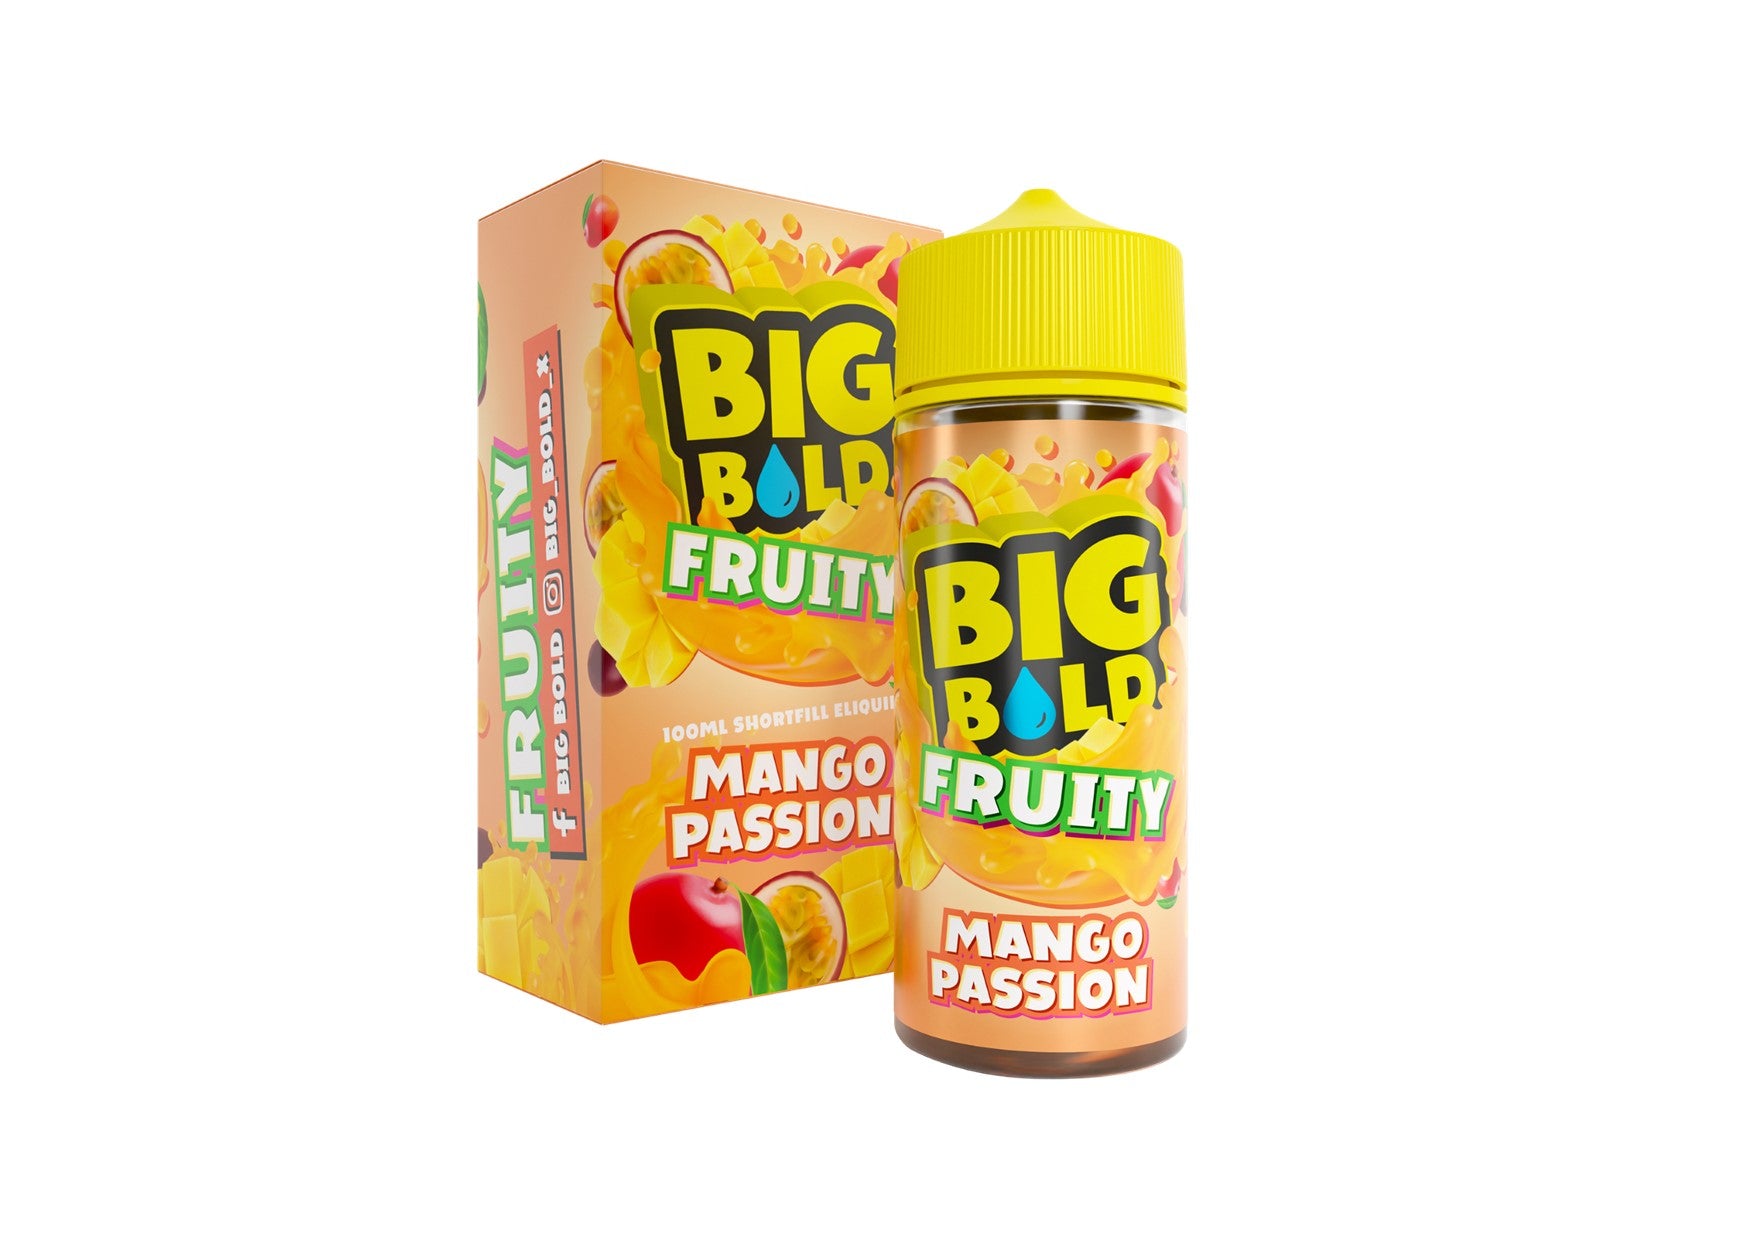 Big Bold | Fruity | Mango Passion